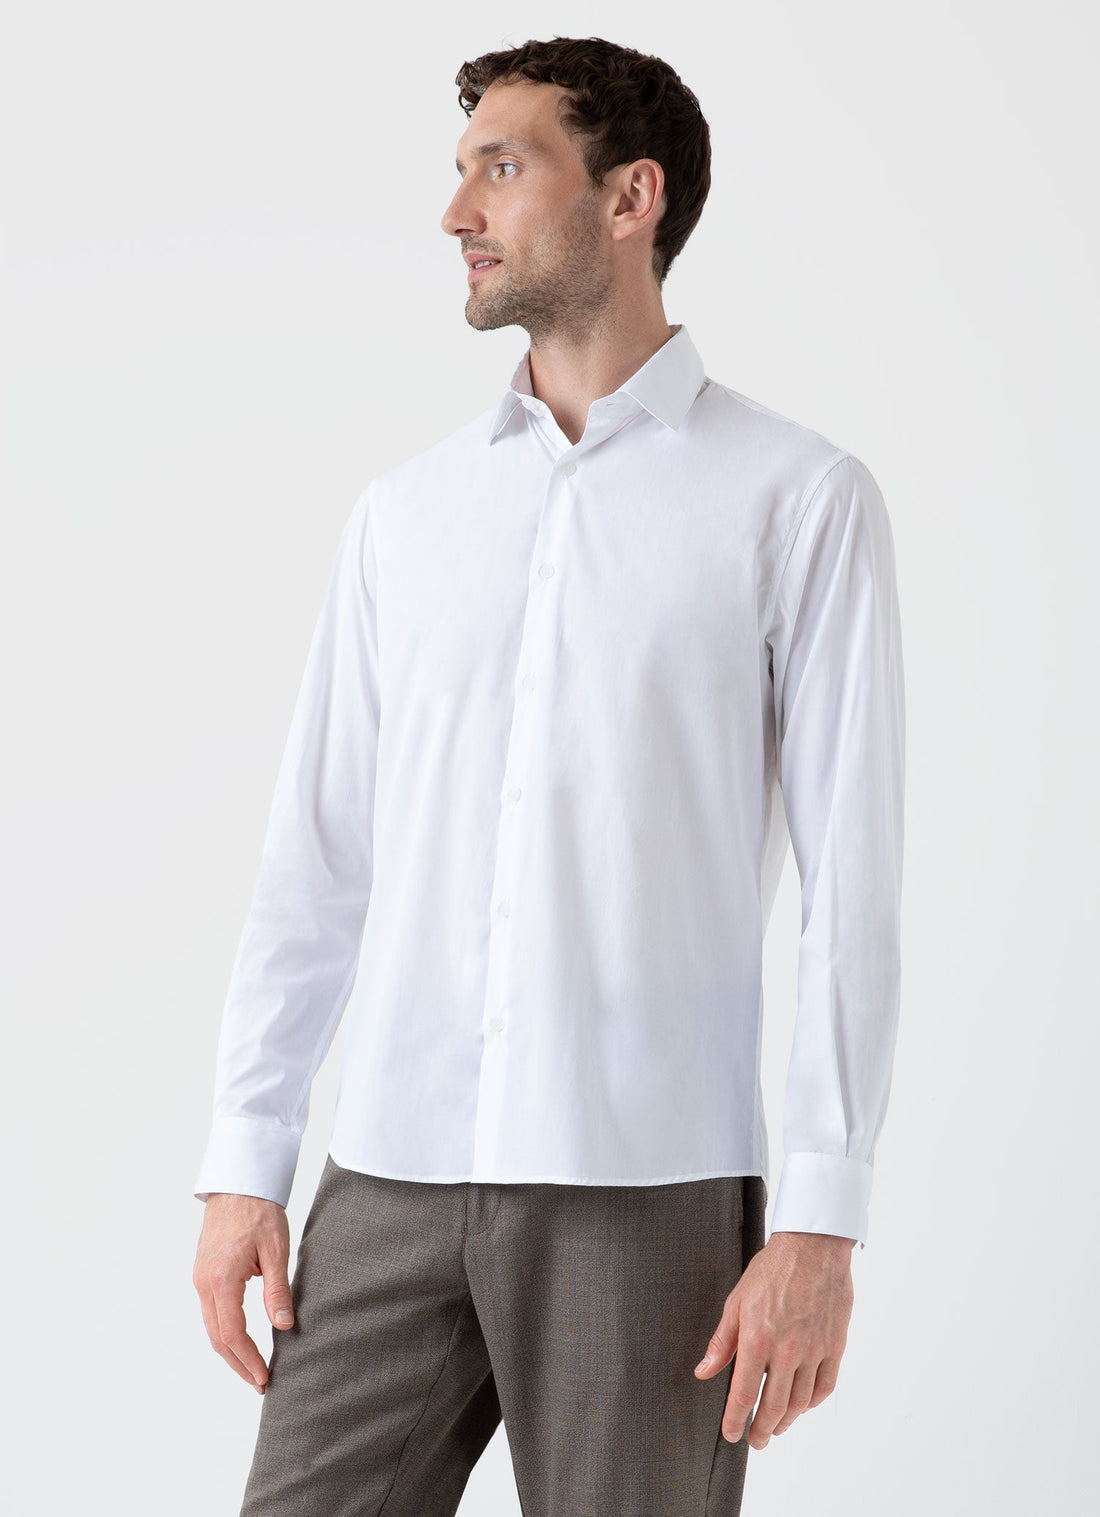 Men's Cotton Stretch Shirt in White